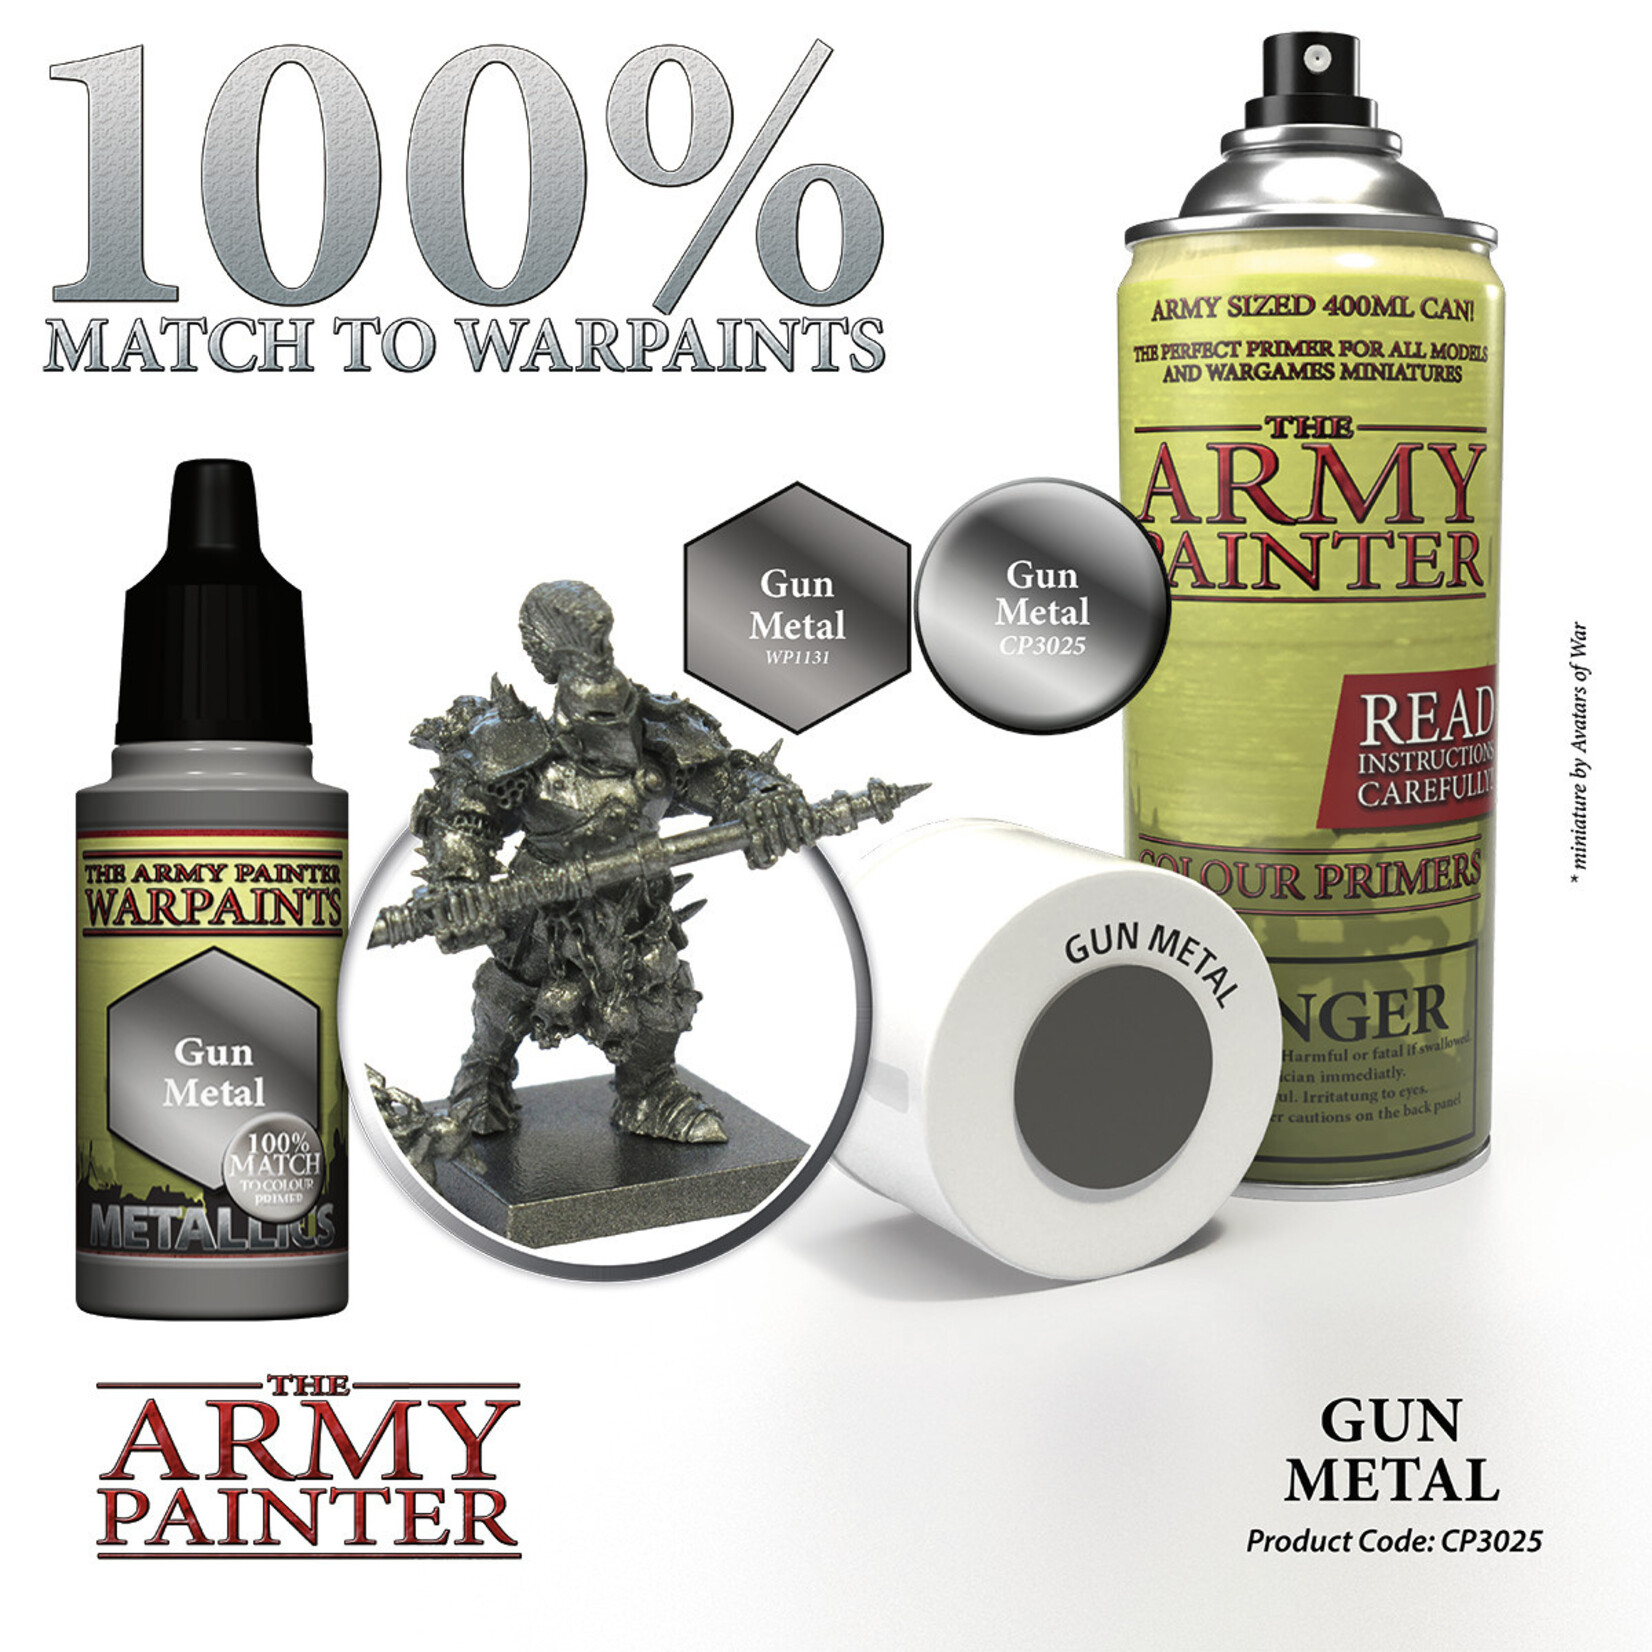 The Army Painter Color Primer Gun Metal